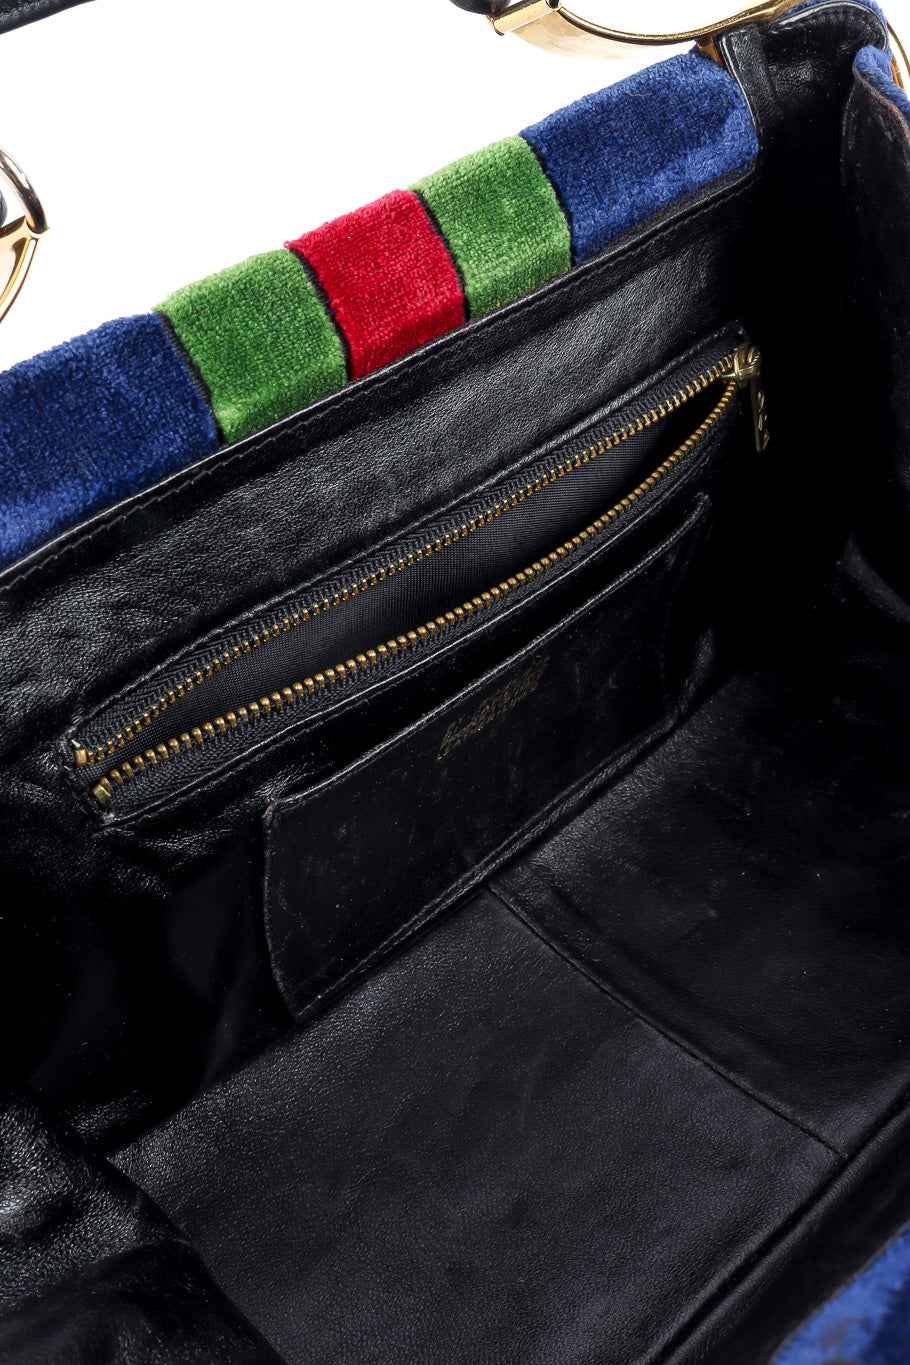 Roberta Di Camerino velvet stripe frame bag product shot of interior details @recessla